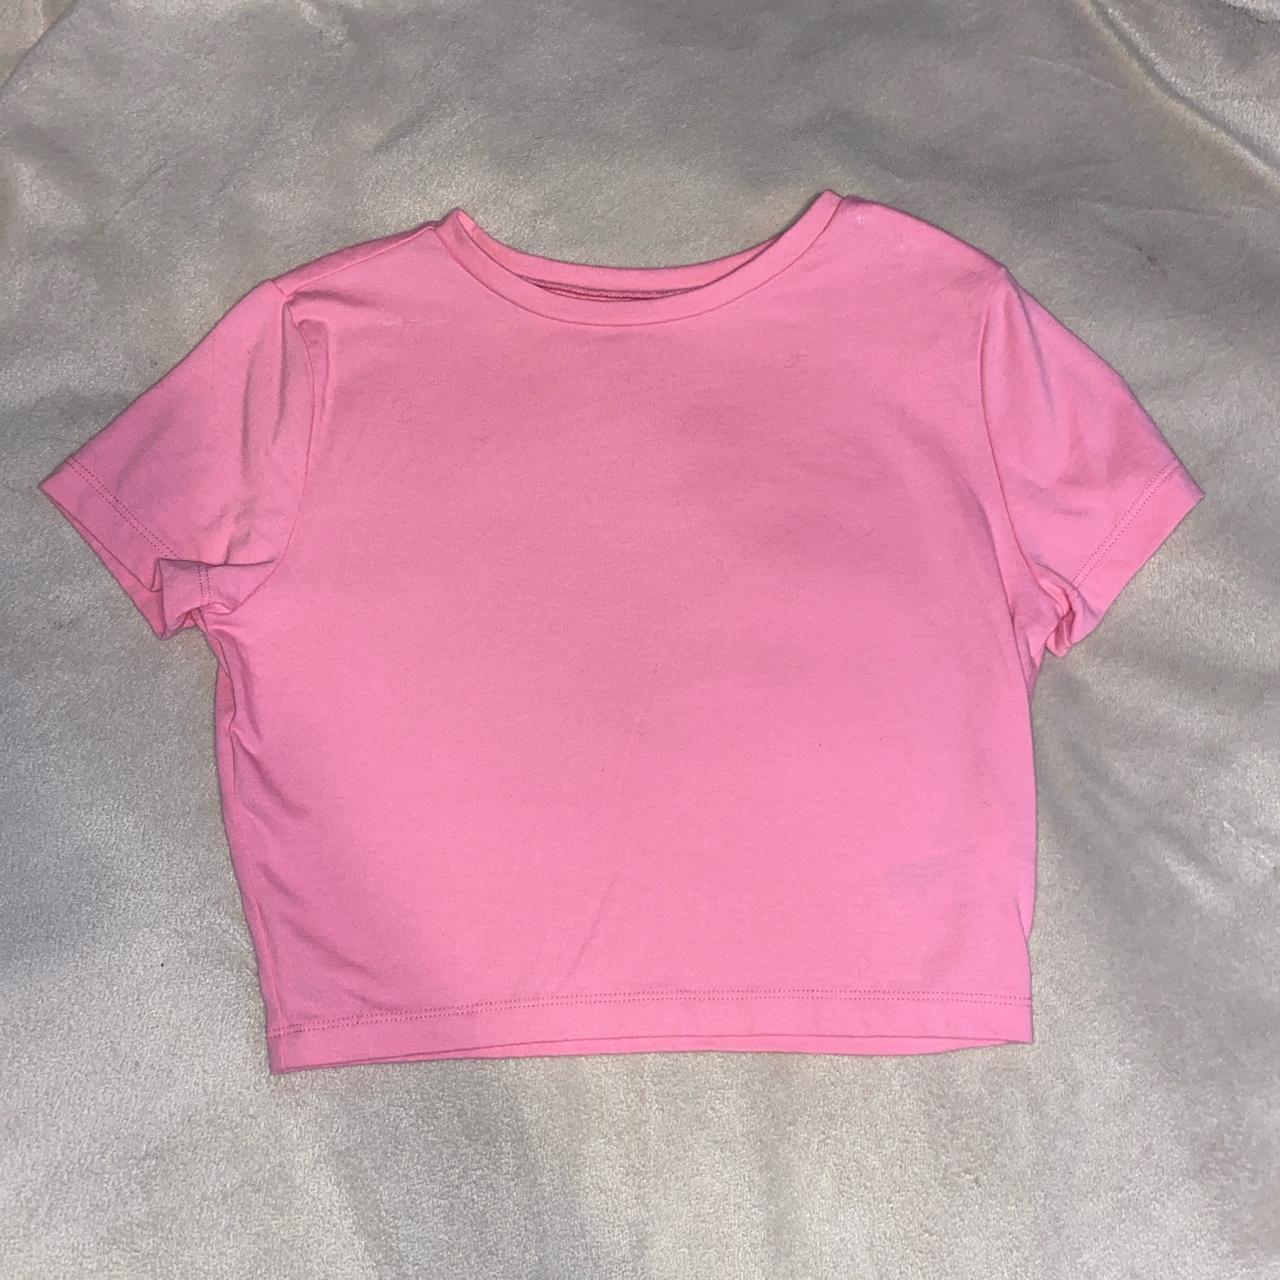 Wild Fable hot pink t shirt crop top - Depop